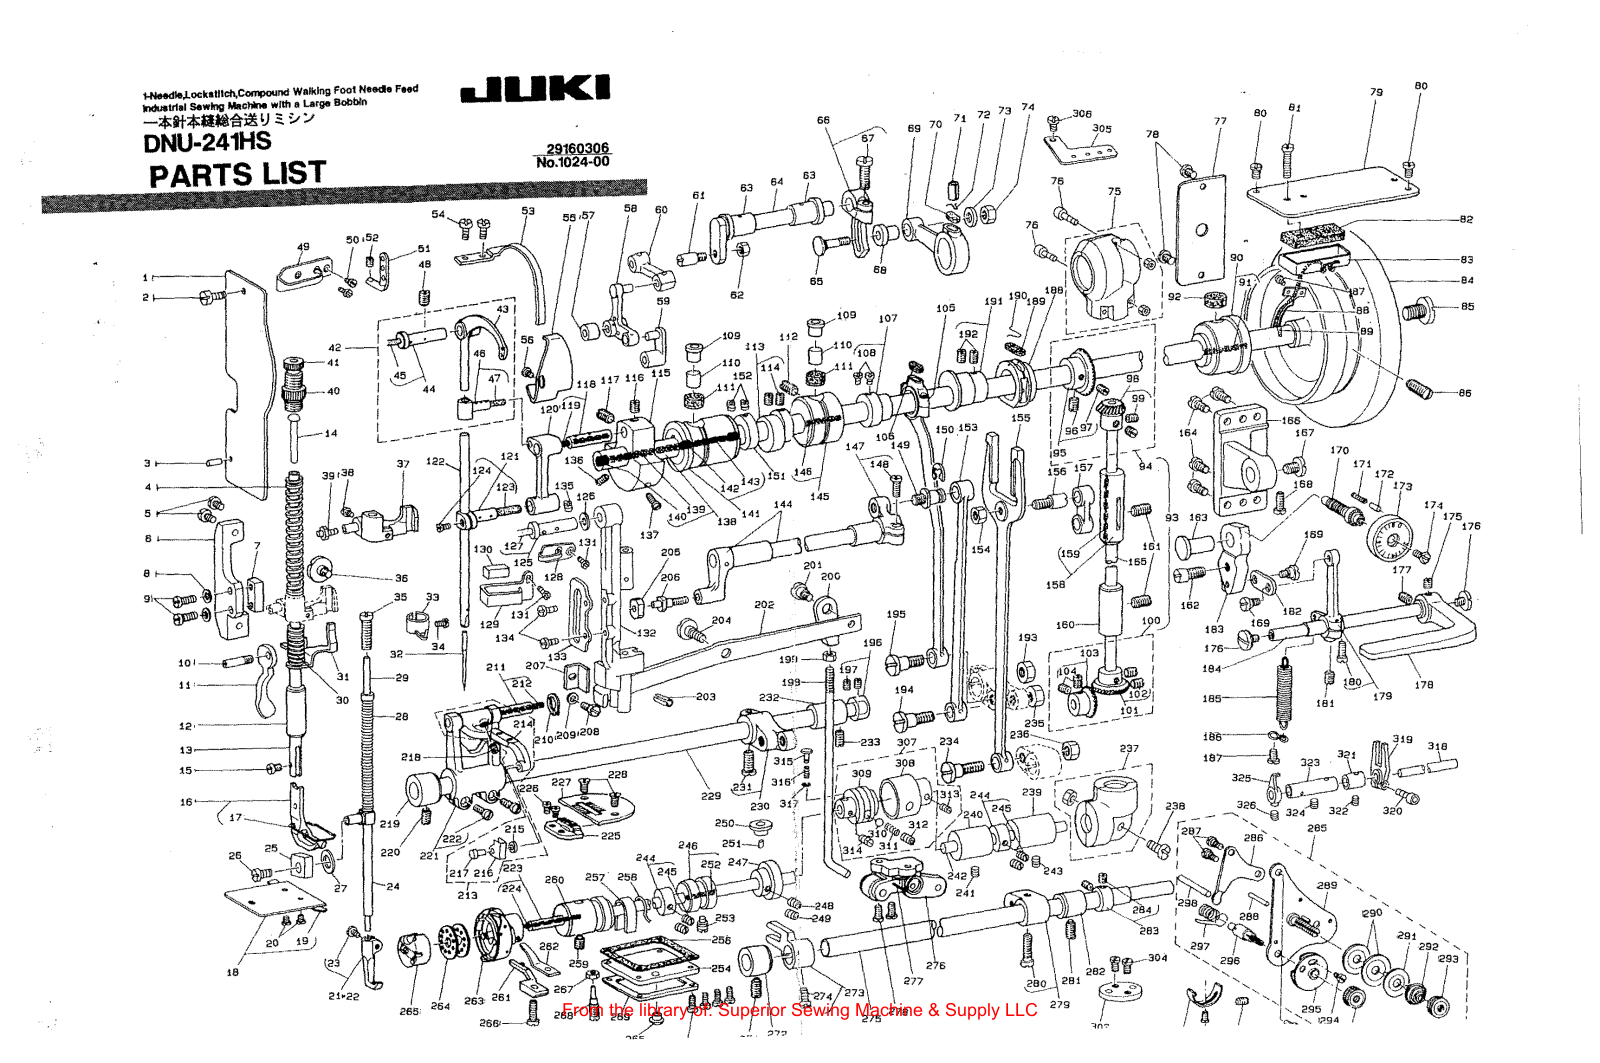 Juki DNU-241HS Manual